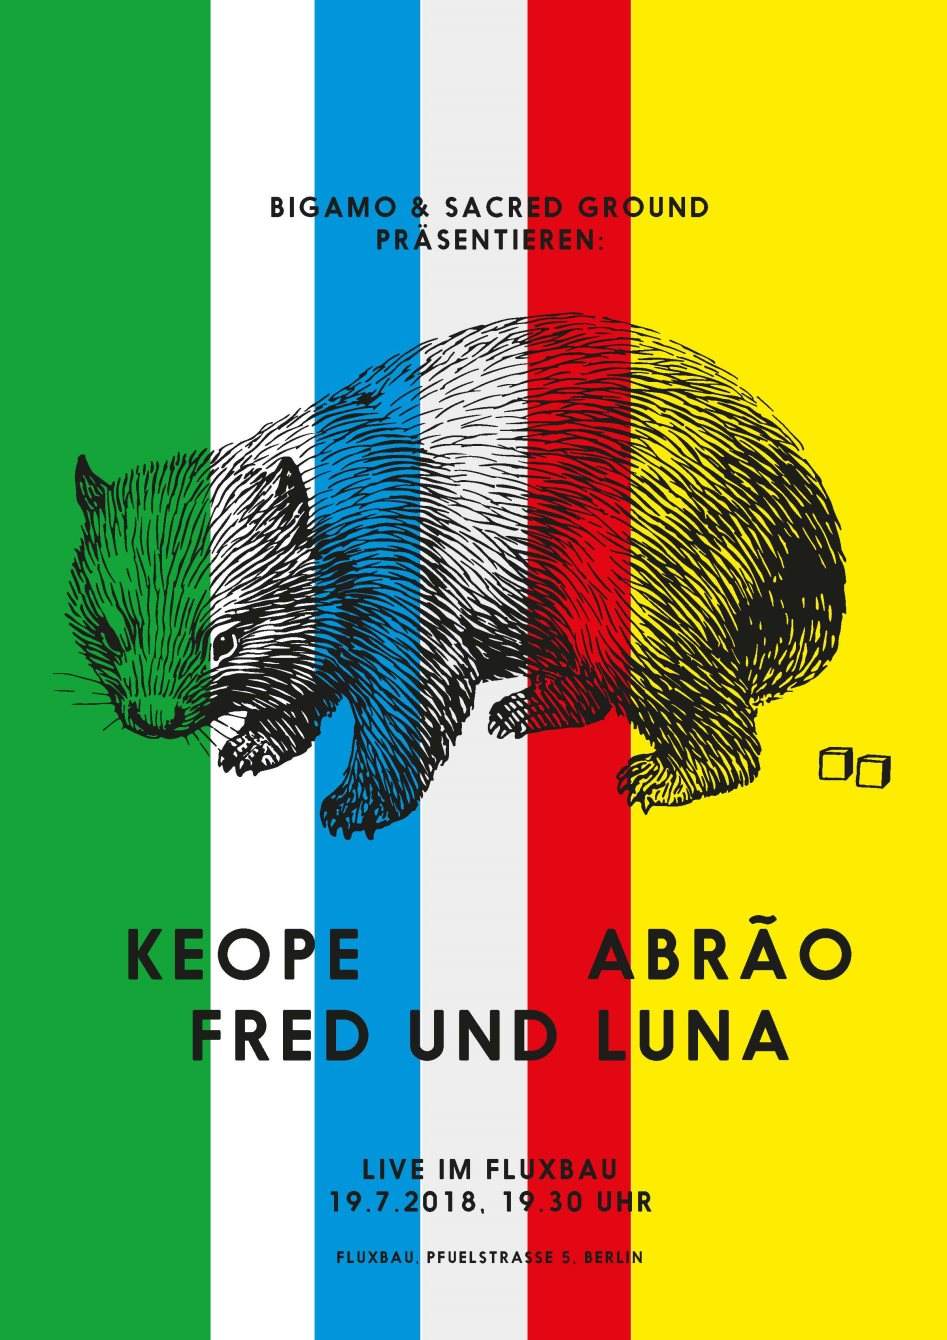 Bigamo Live with Abrão, Keope & Fred und Luna - フライヤー表